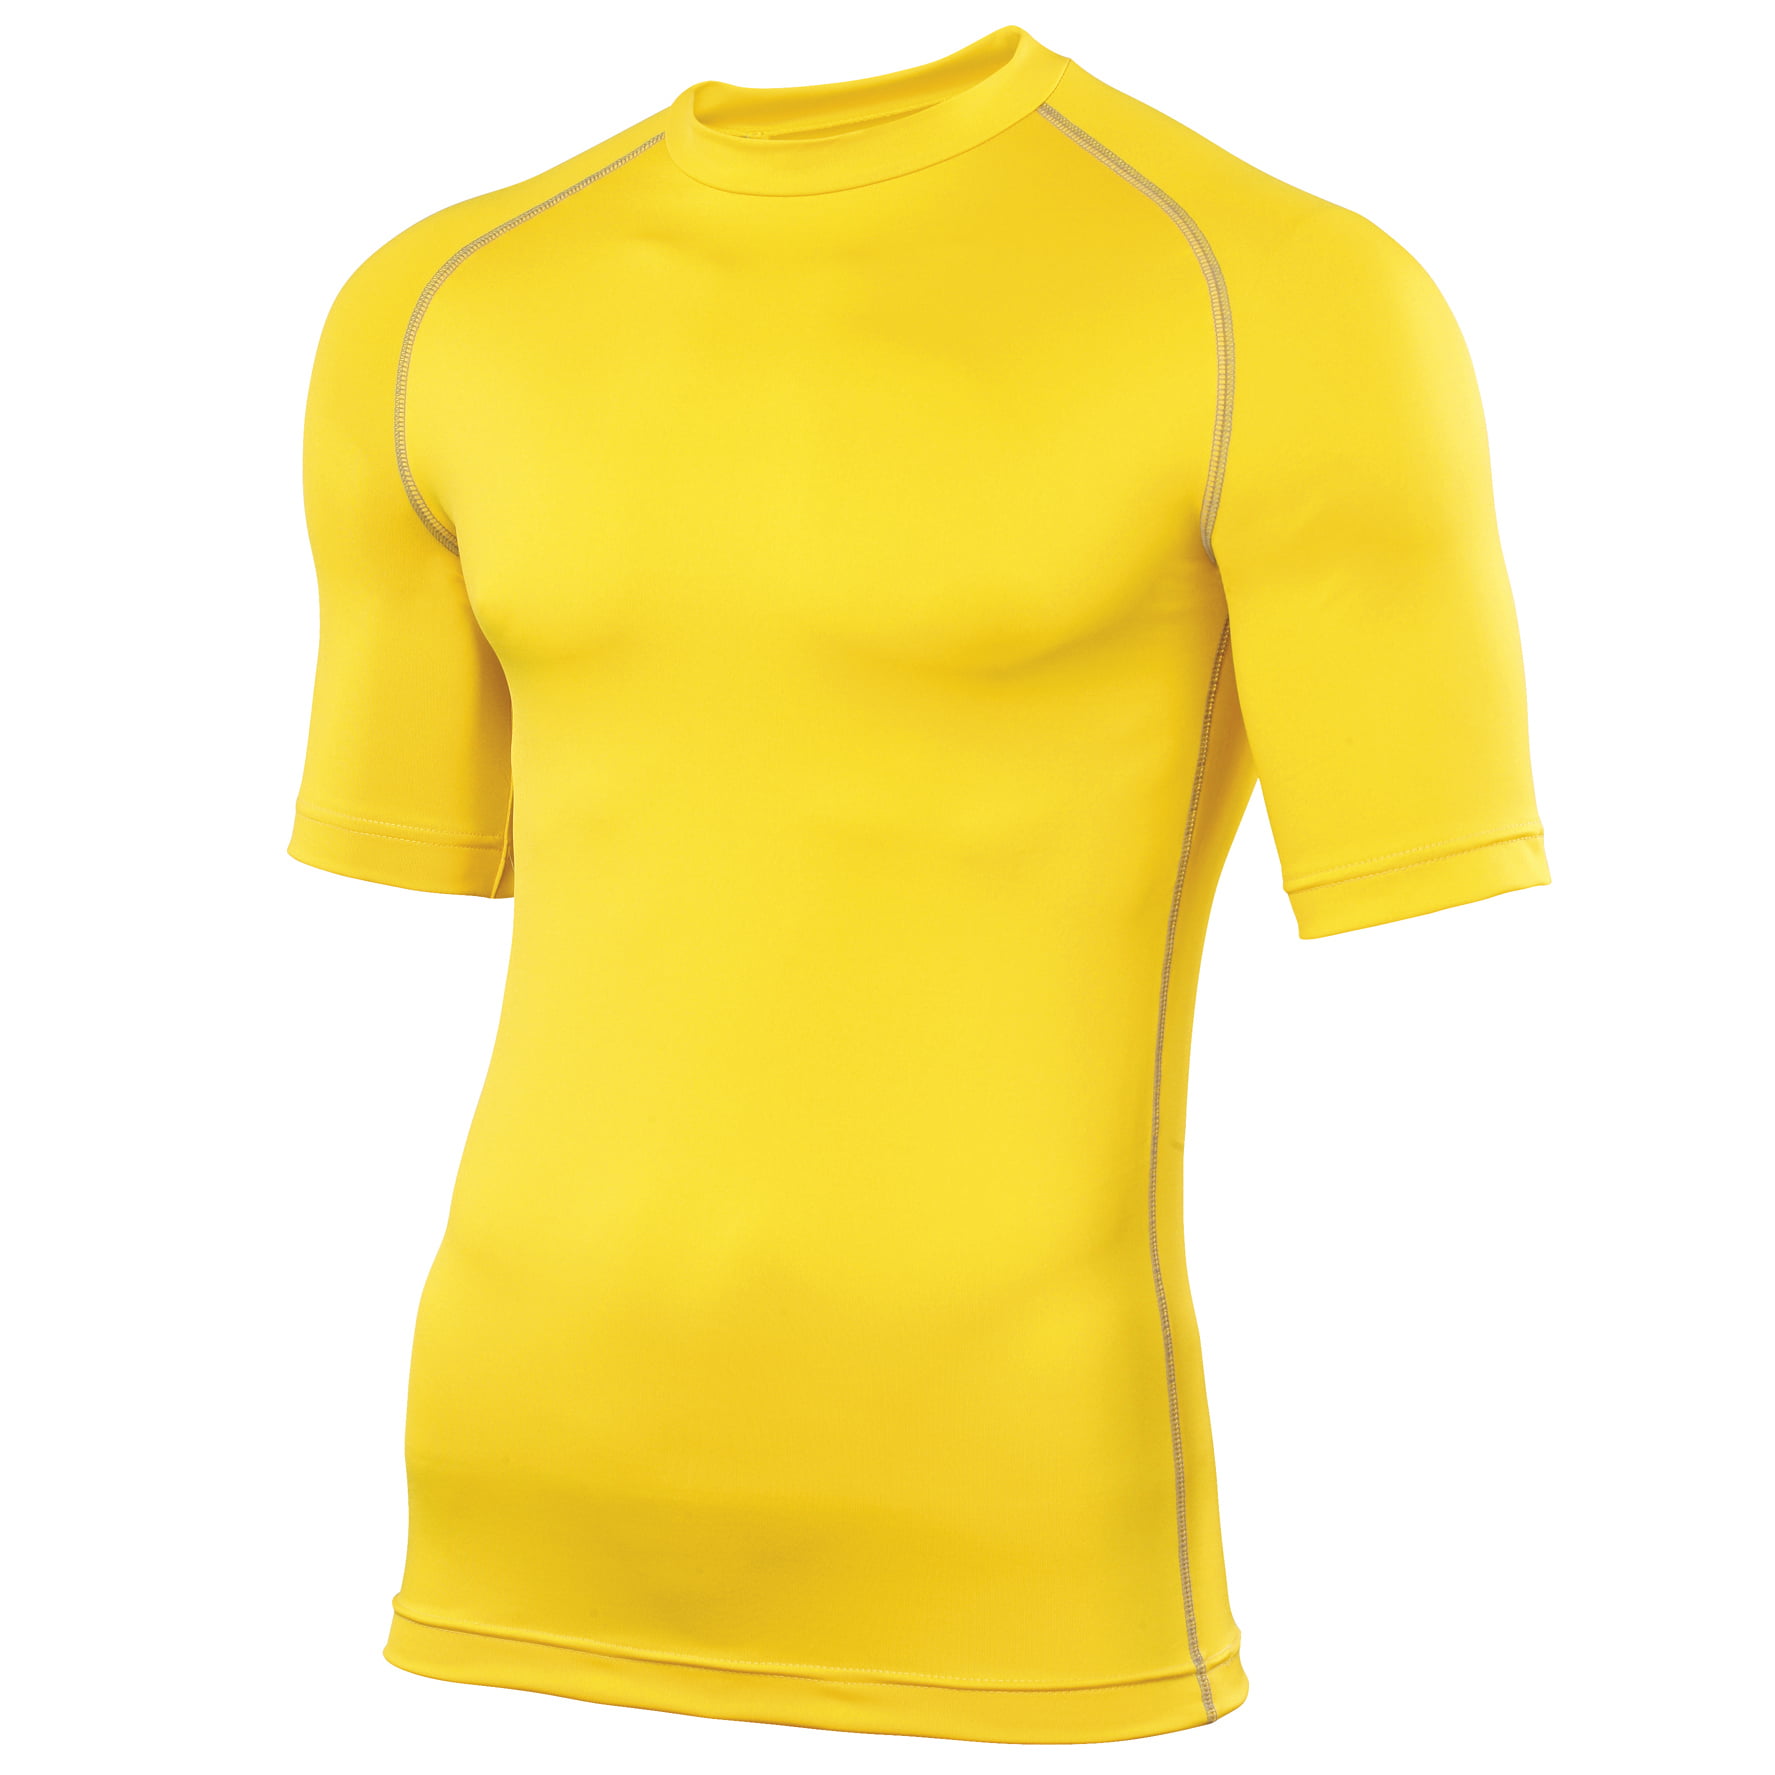 Activewear Fitness Sports T-Shirt Rhino Men's Short Sleeve Baselayer Tee RH002 